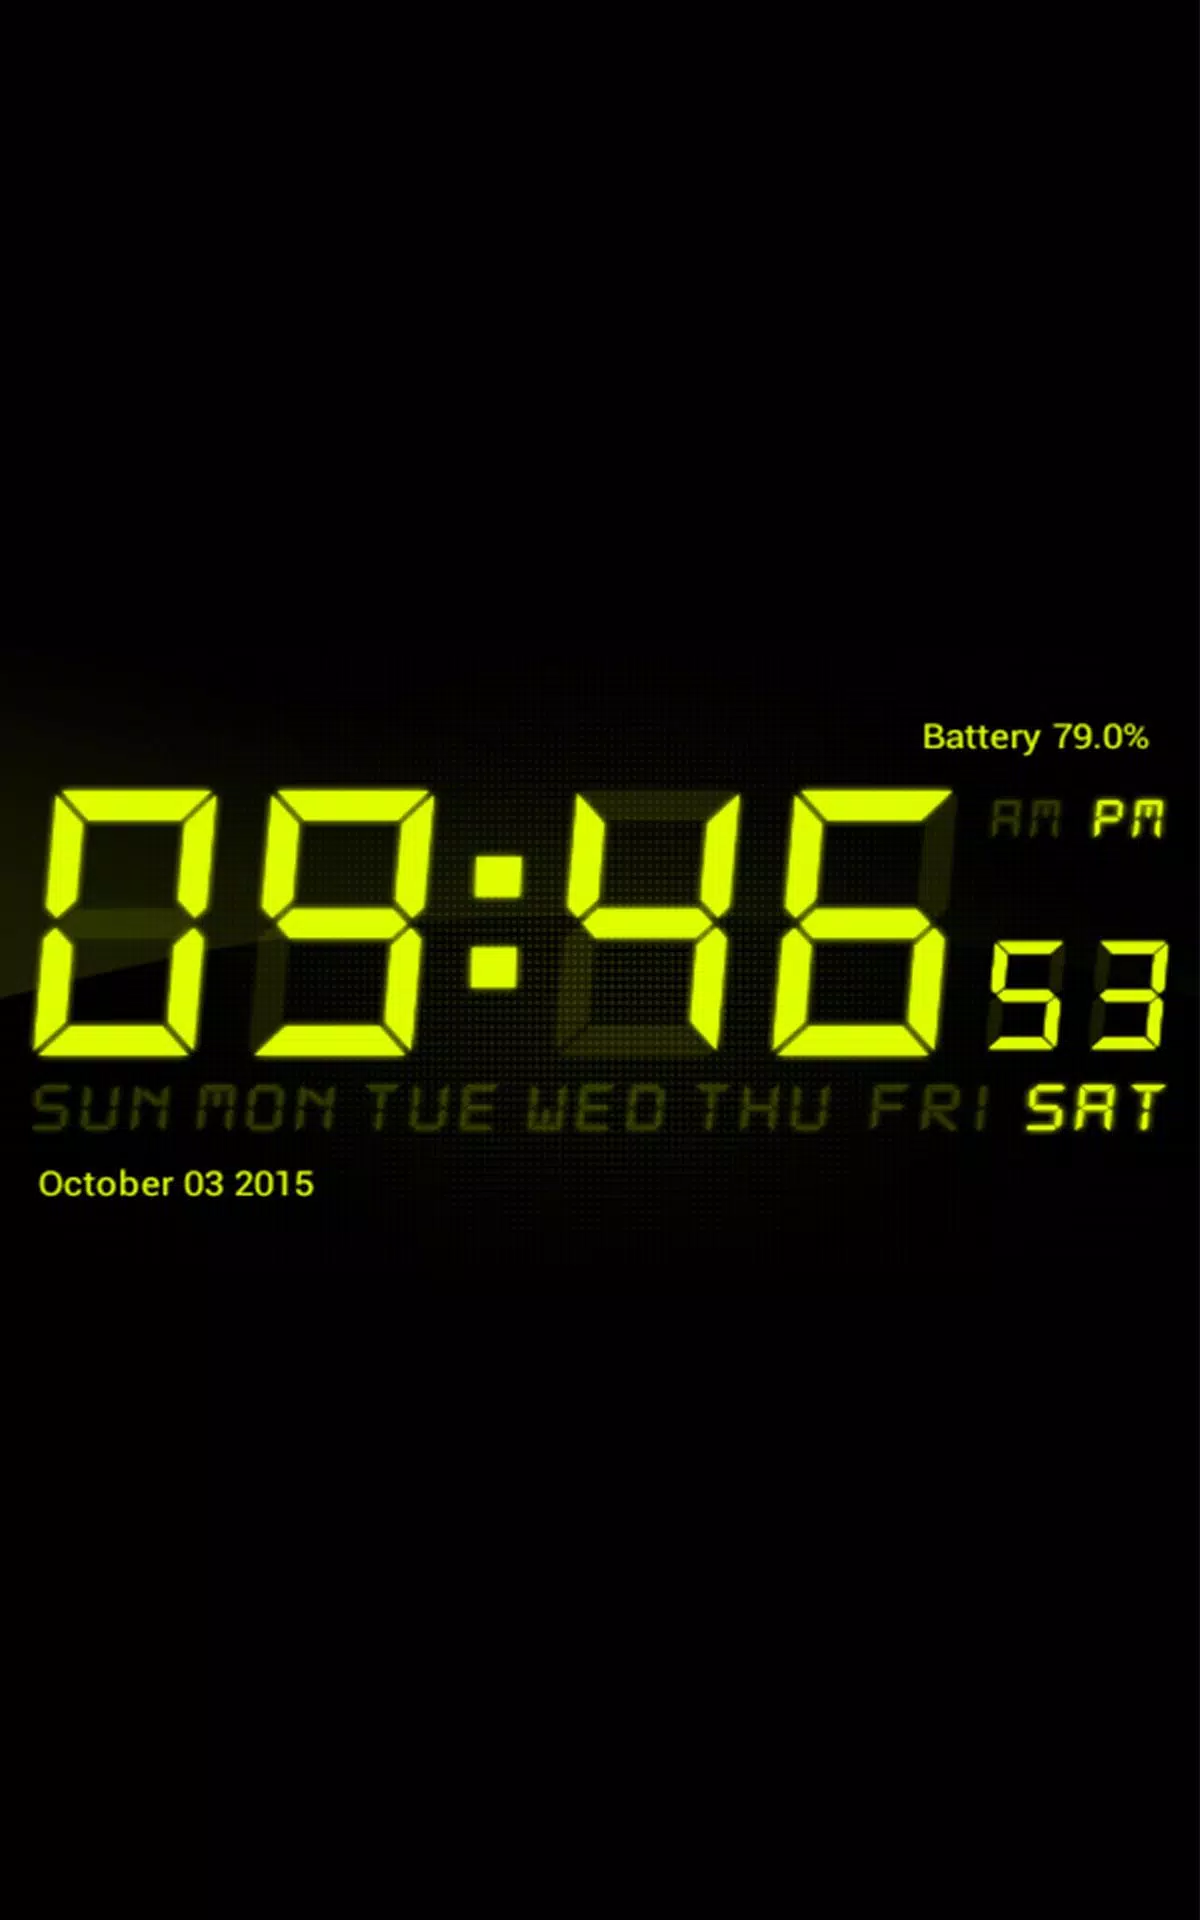 Digital Clock Widget Apk For Android Download